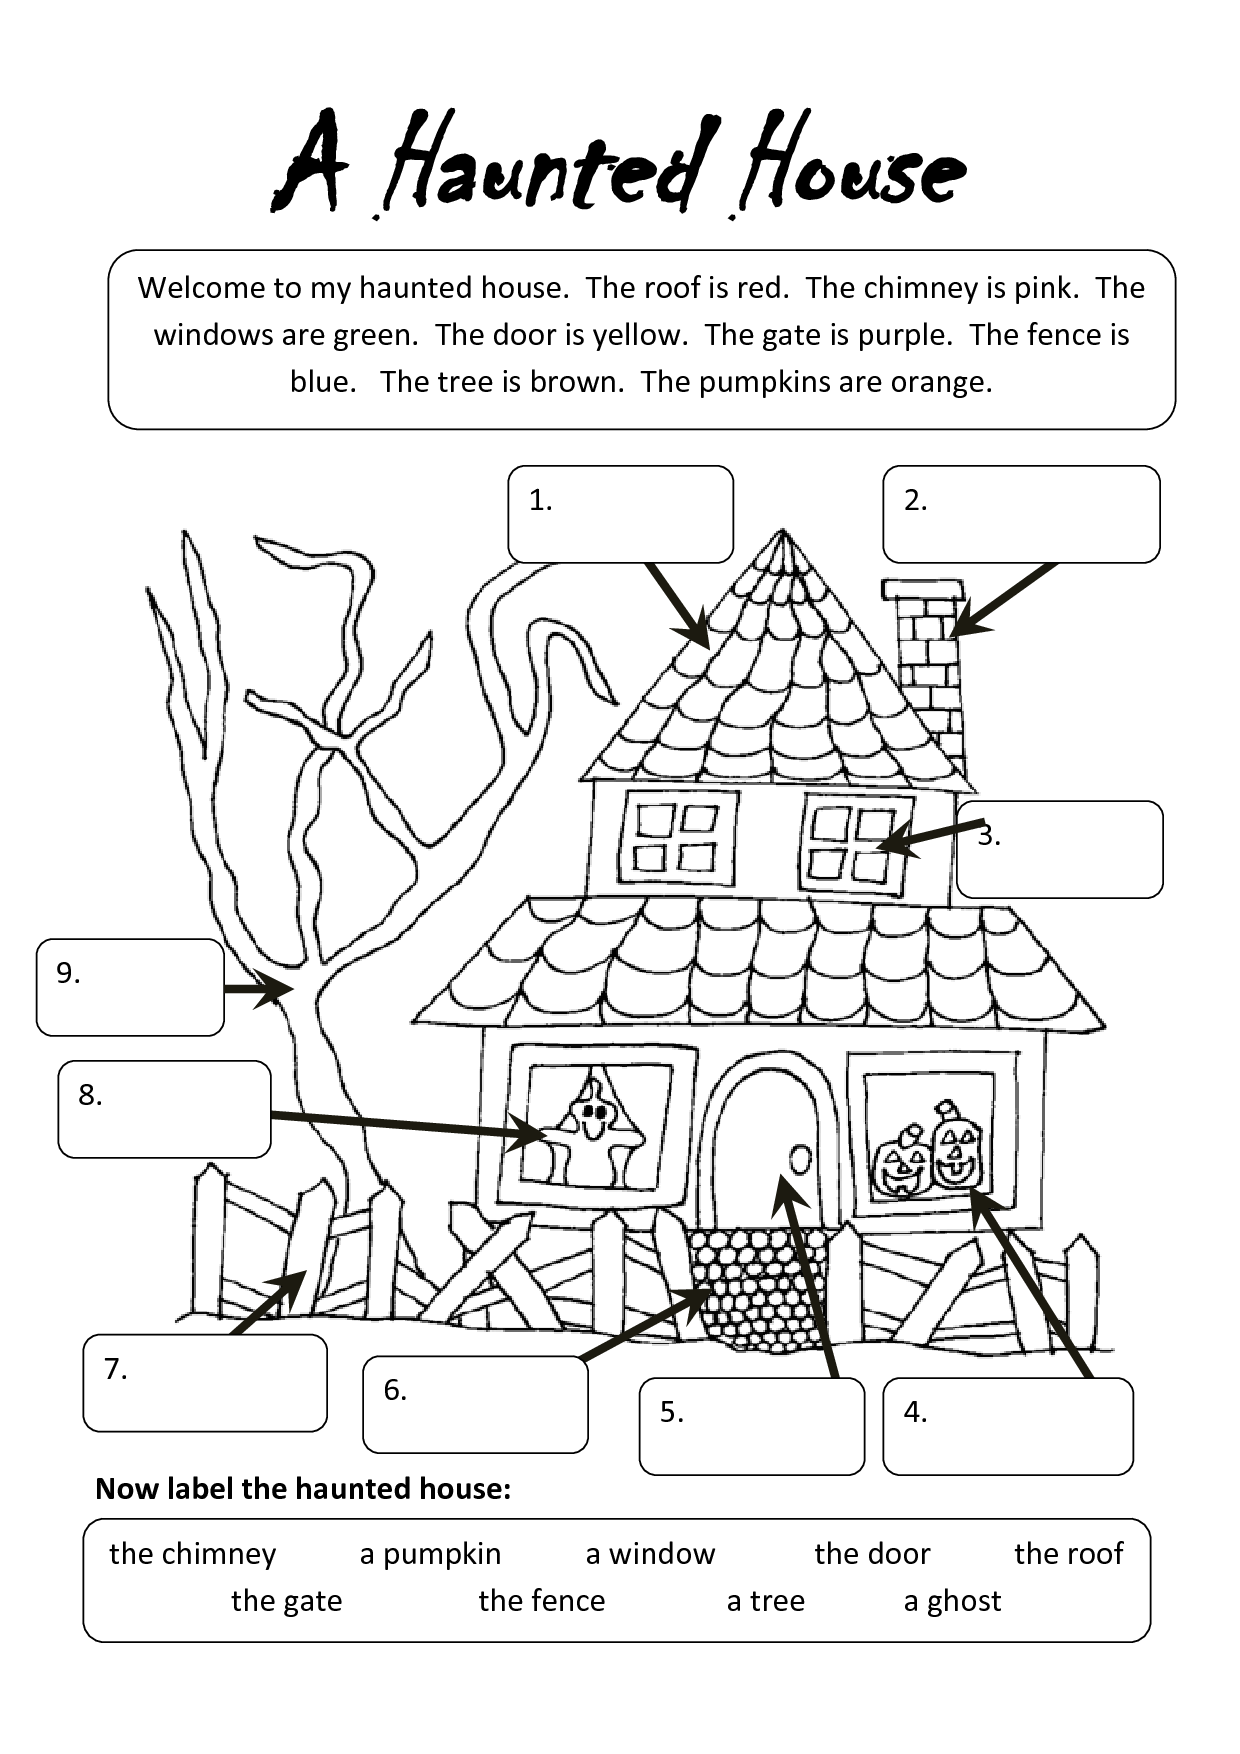 Solution a haunted house fun activities games picture description exercises